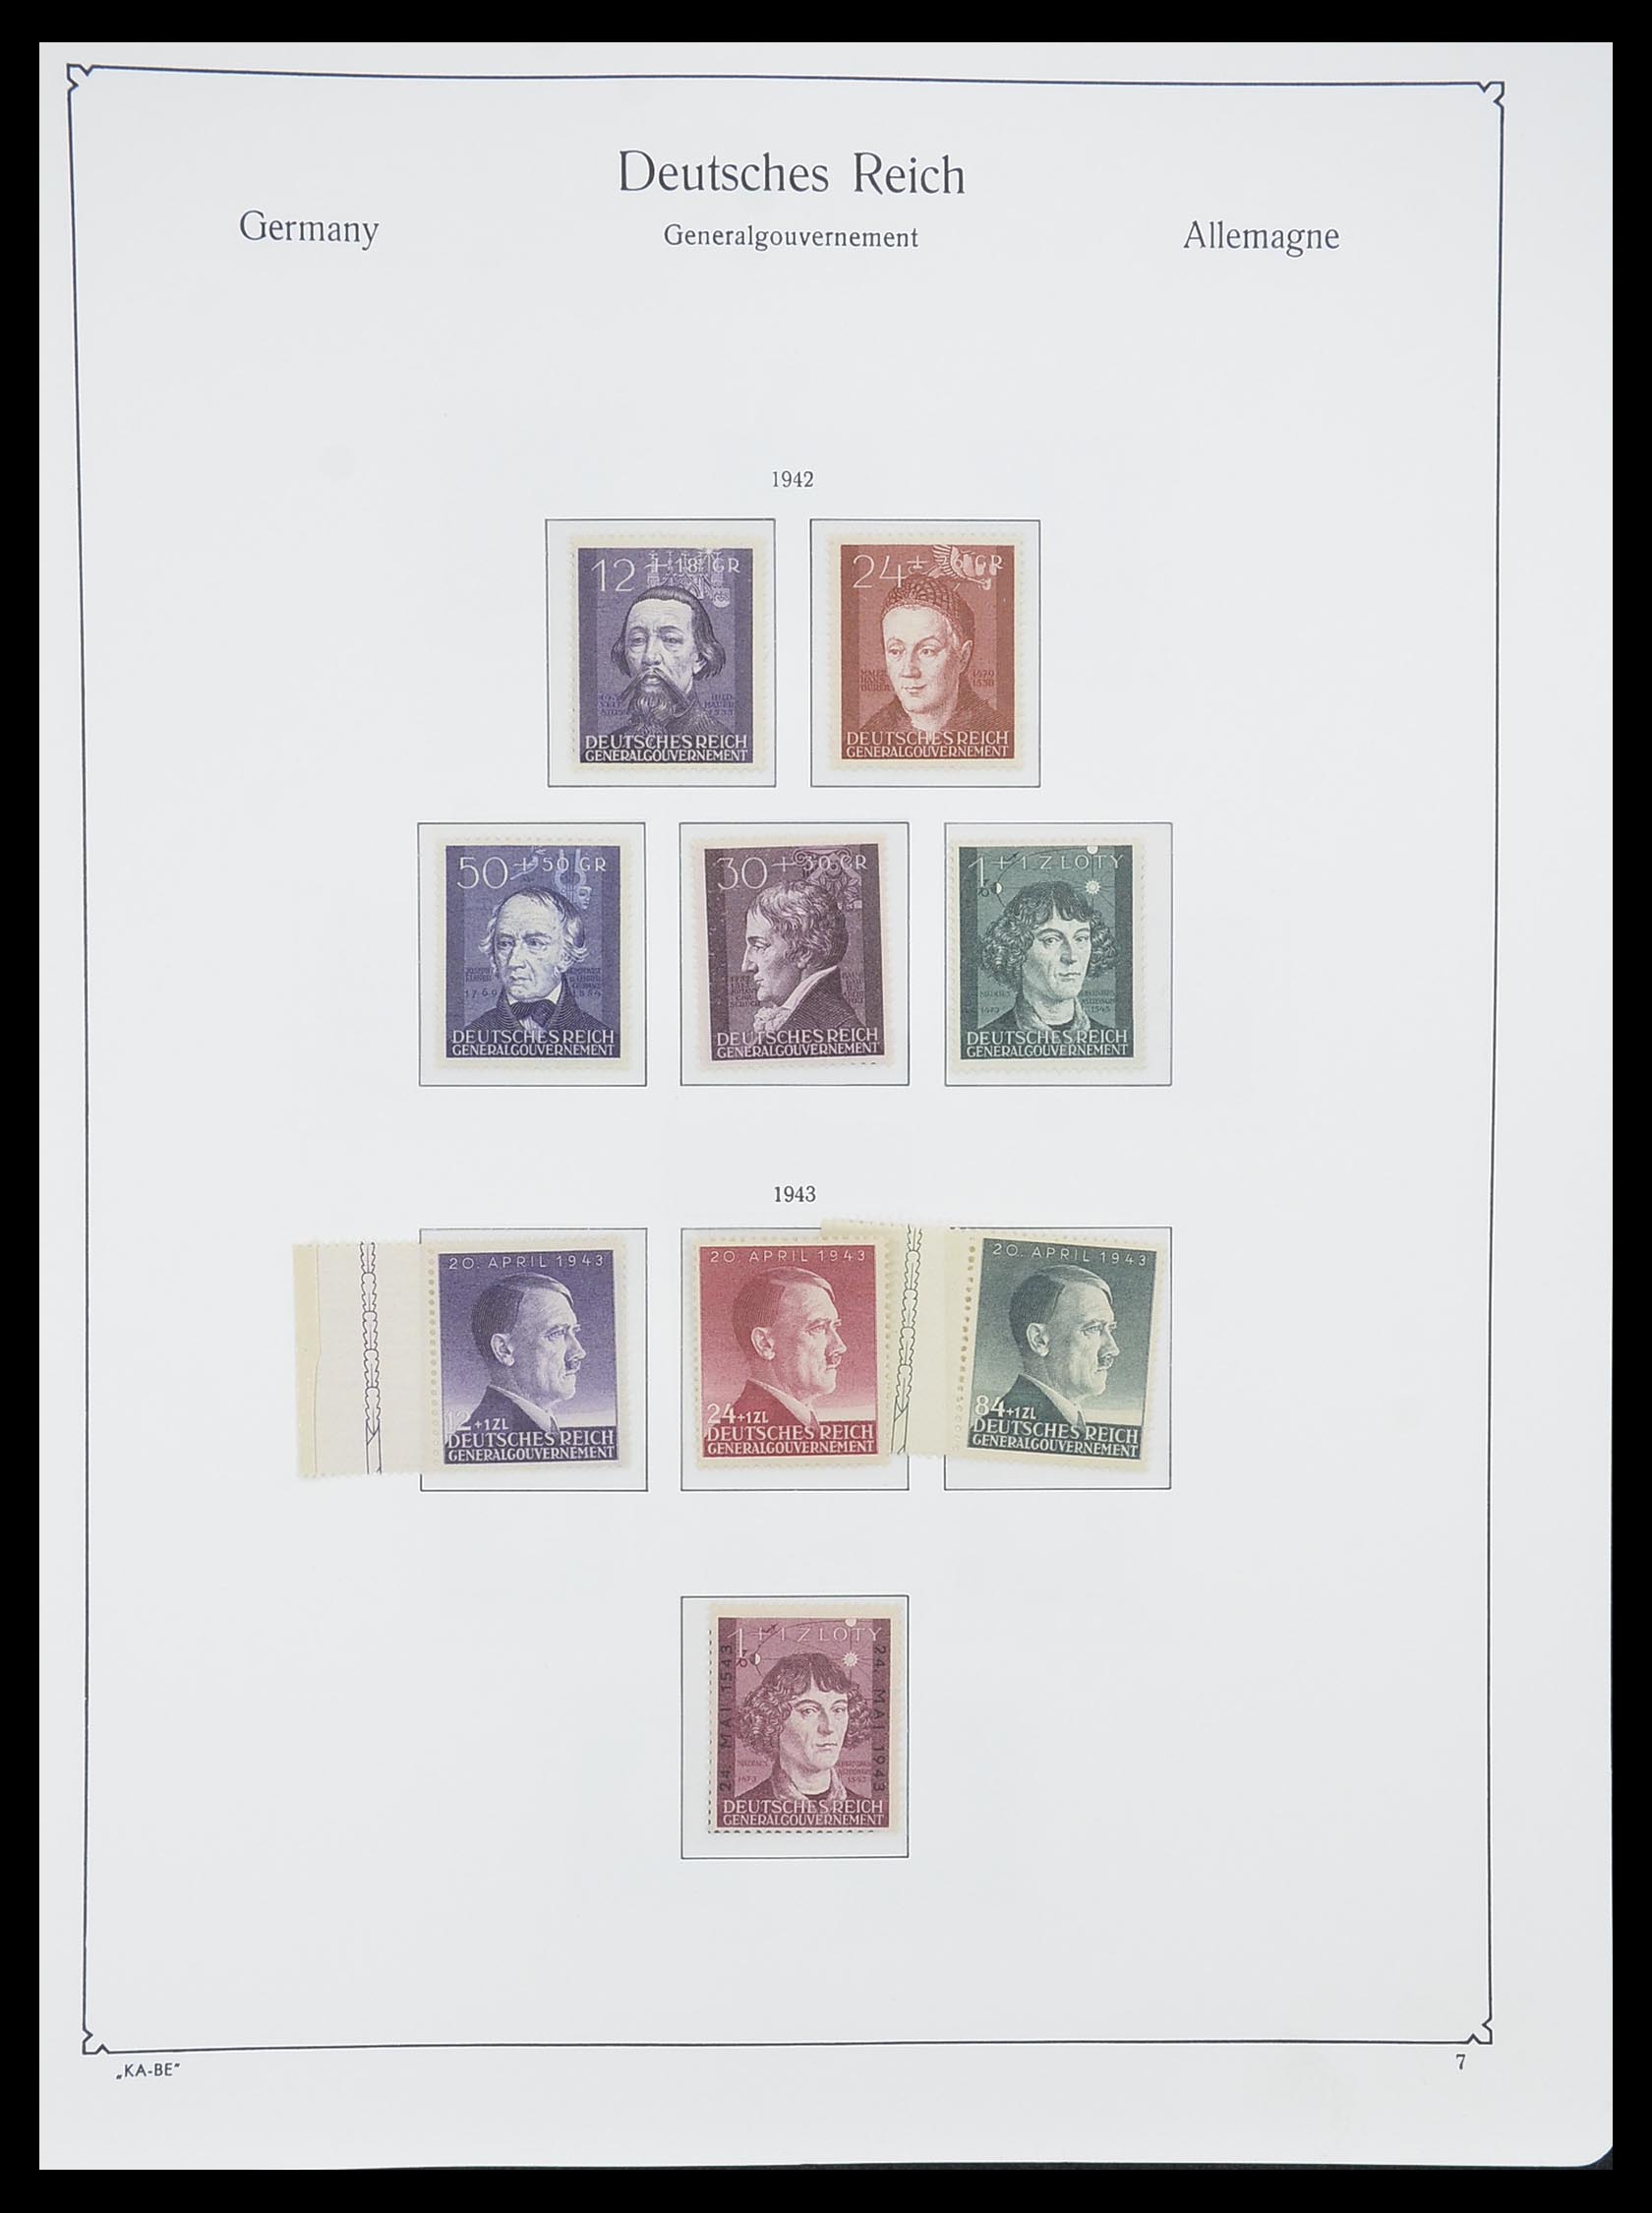 33359 105 - Stamp collection 33359 German Reich 1872-1945.